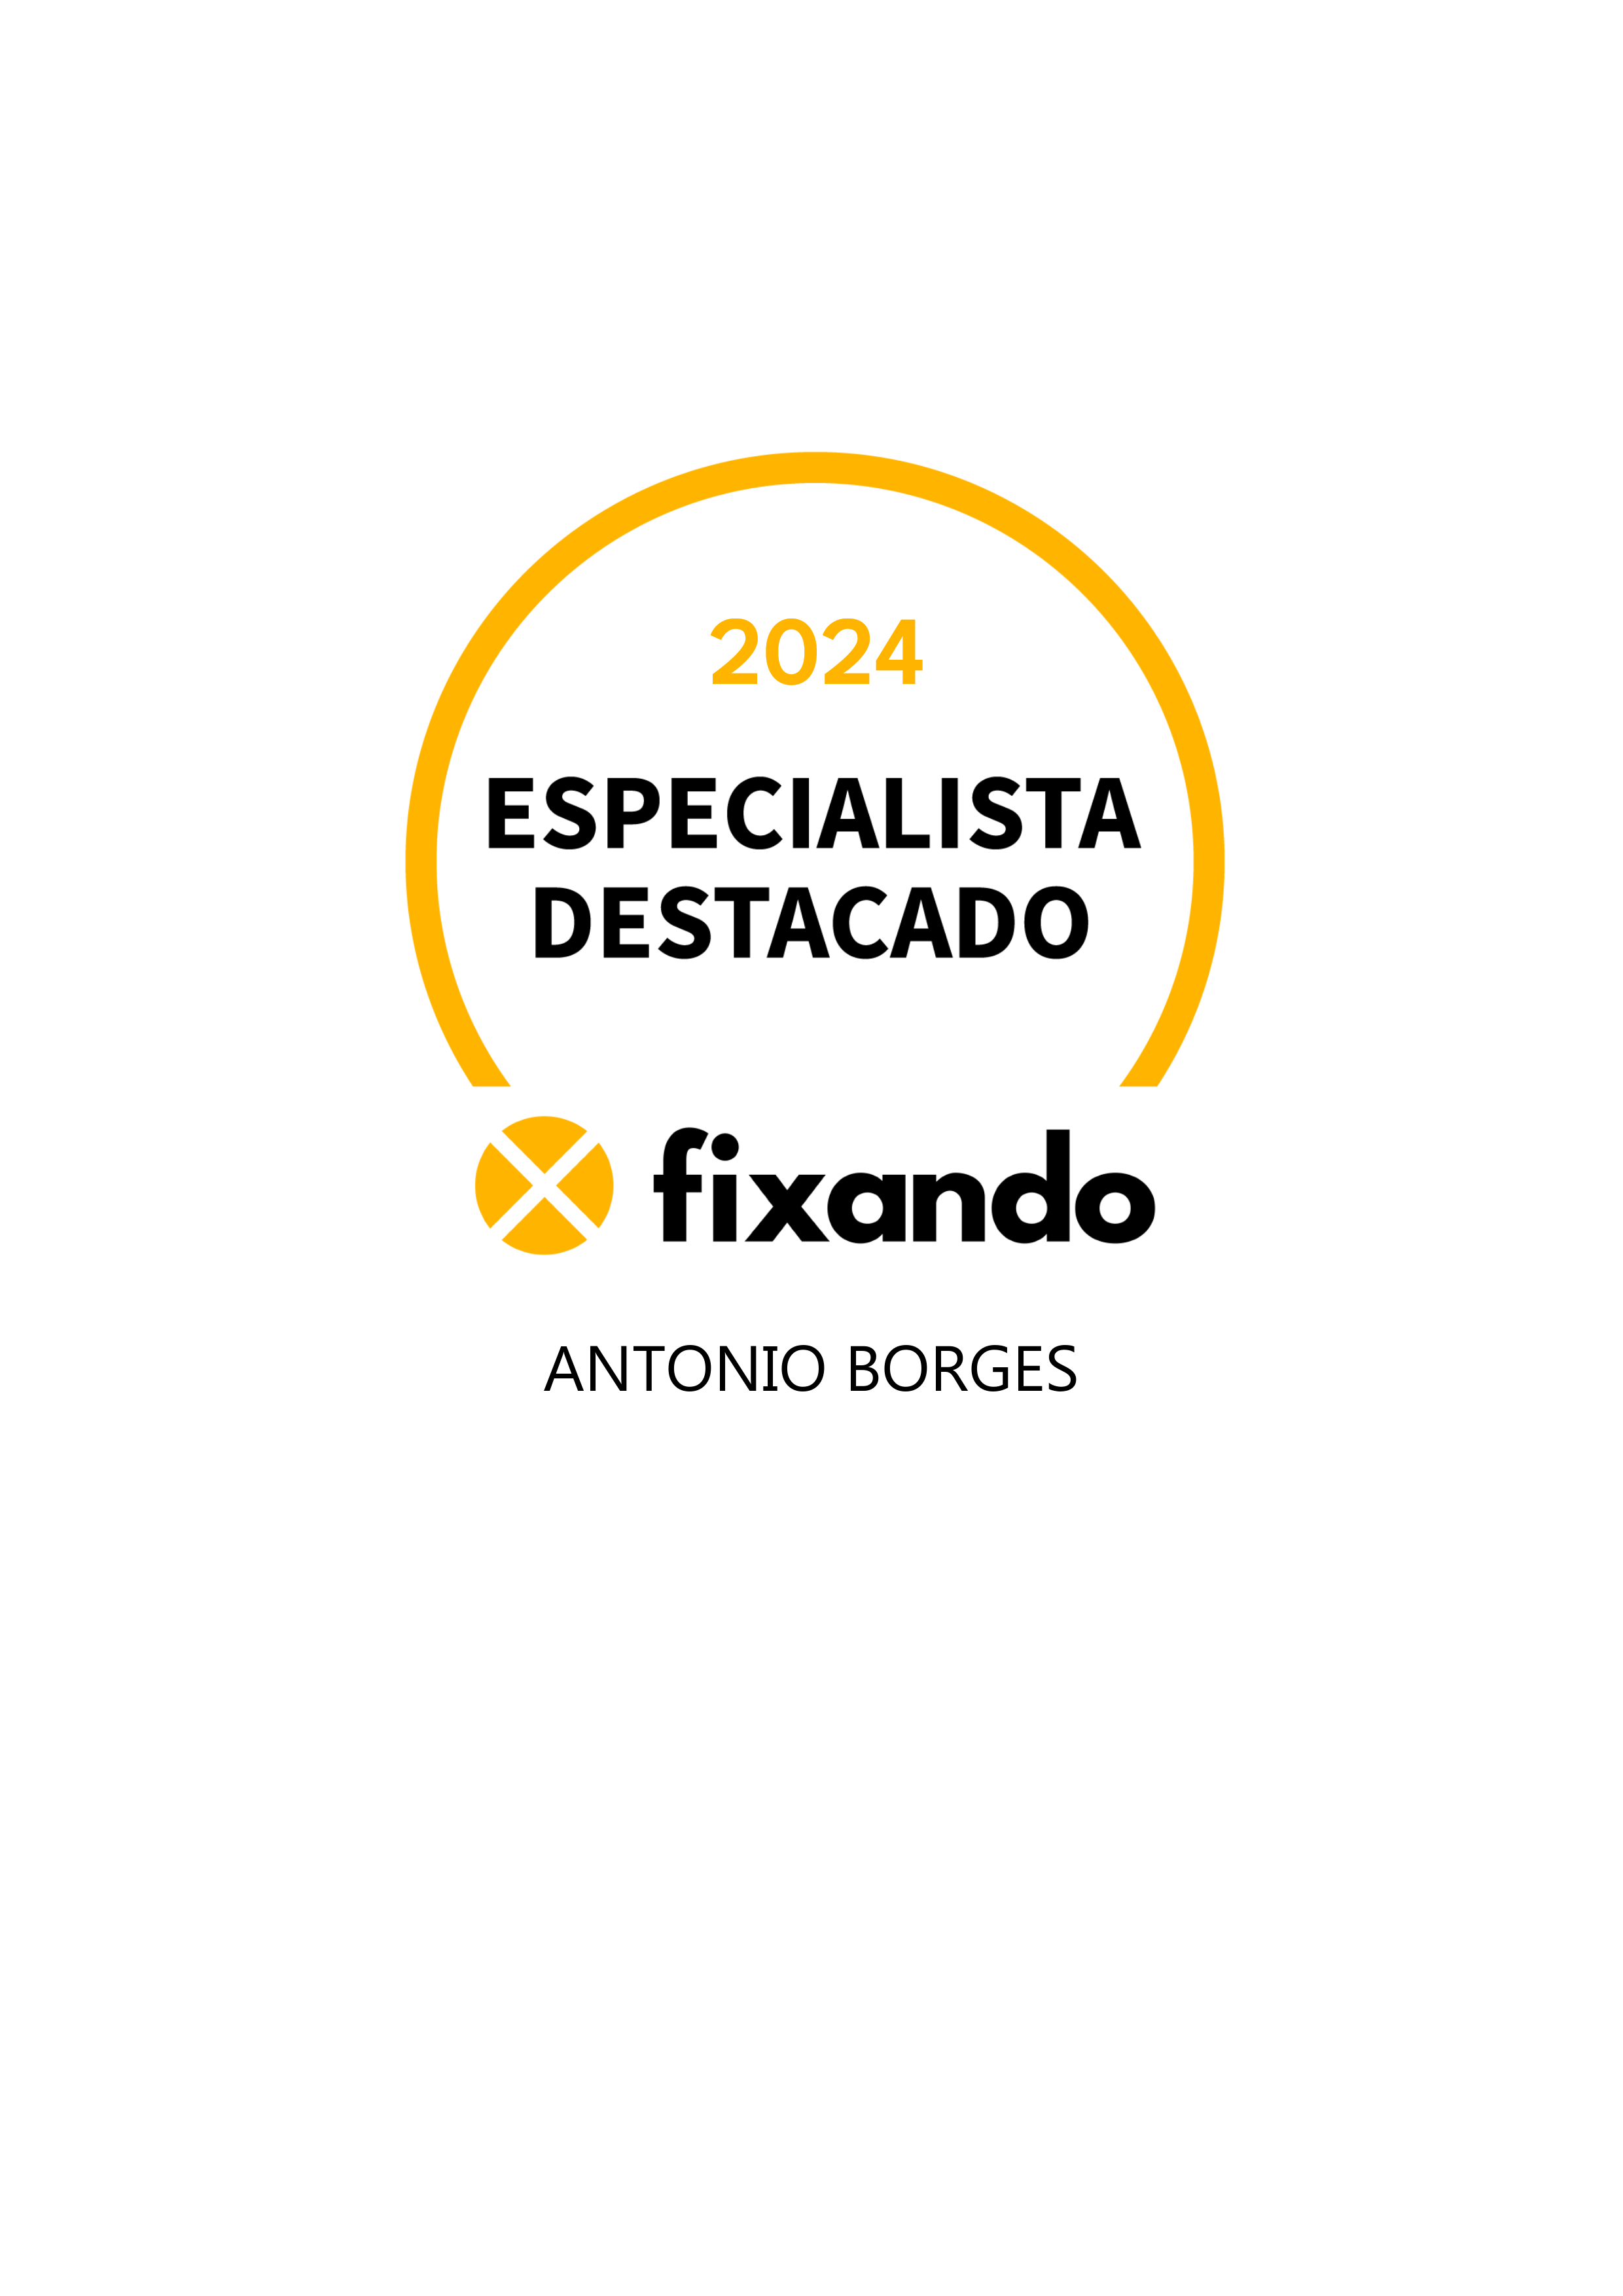 Antonio Borges - Matosinhos - Suporte Administrativo